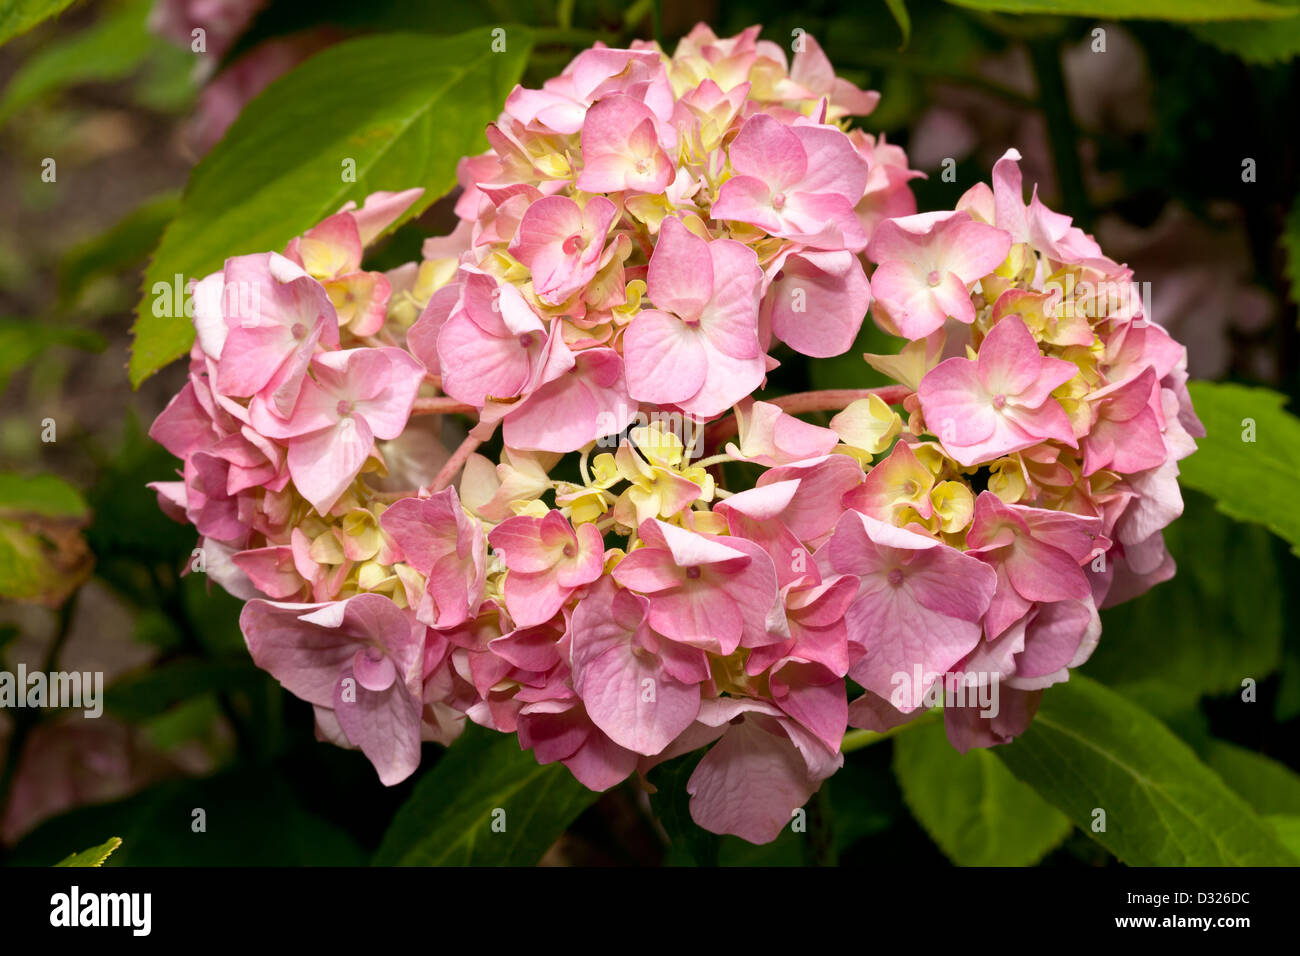 Hortensie, Hydrangea macrophylla, Hydrangeaceae, Stock Photo